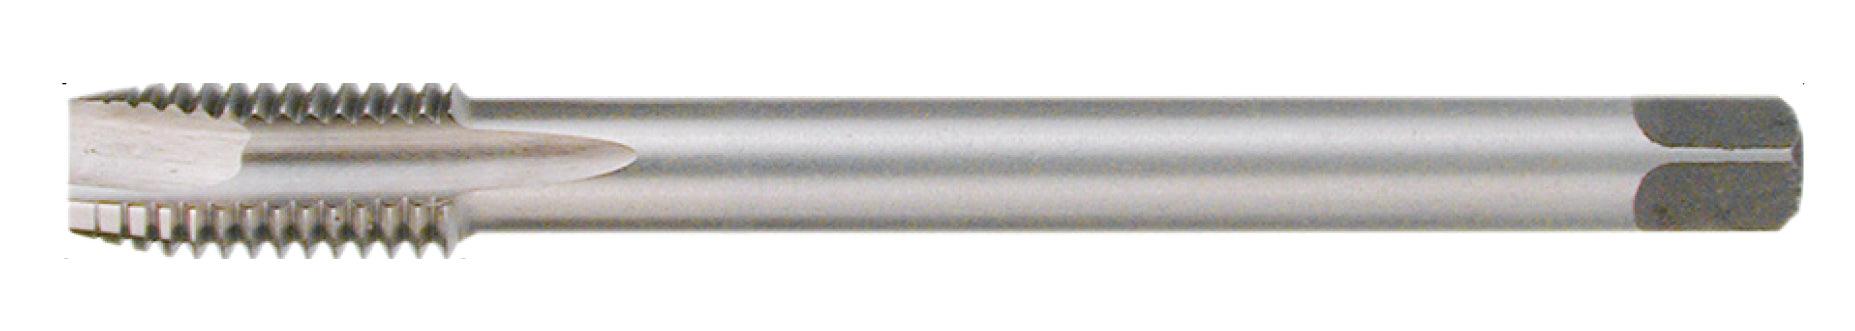 Labor Maschinengewindebohrer Durchgangslöcher M30 HSS 5% Kobalt DIN376B - SP232300 - Tools.de TP Profishop GmbH